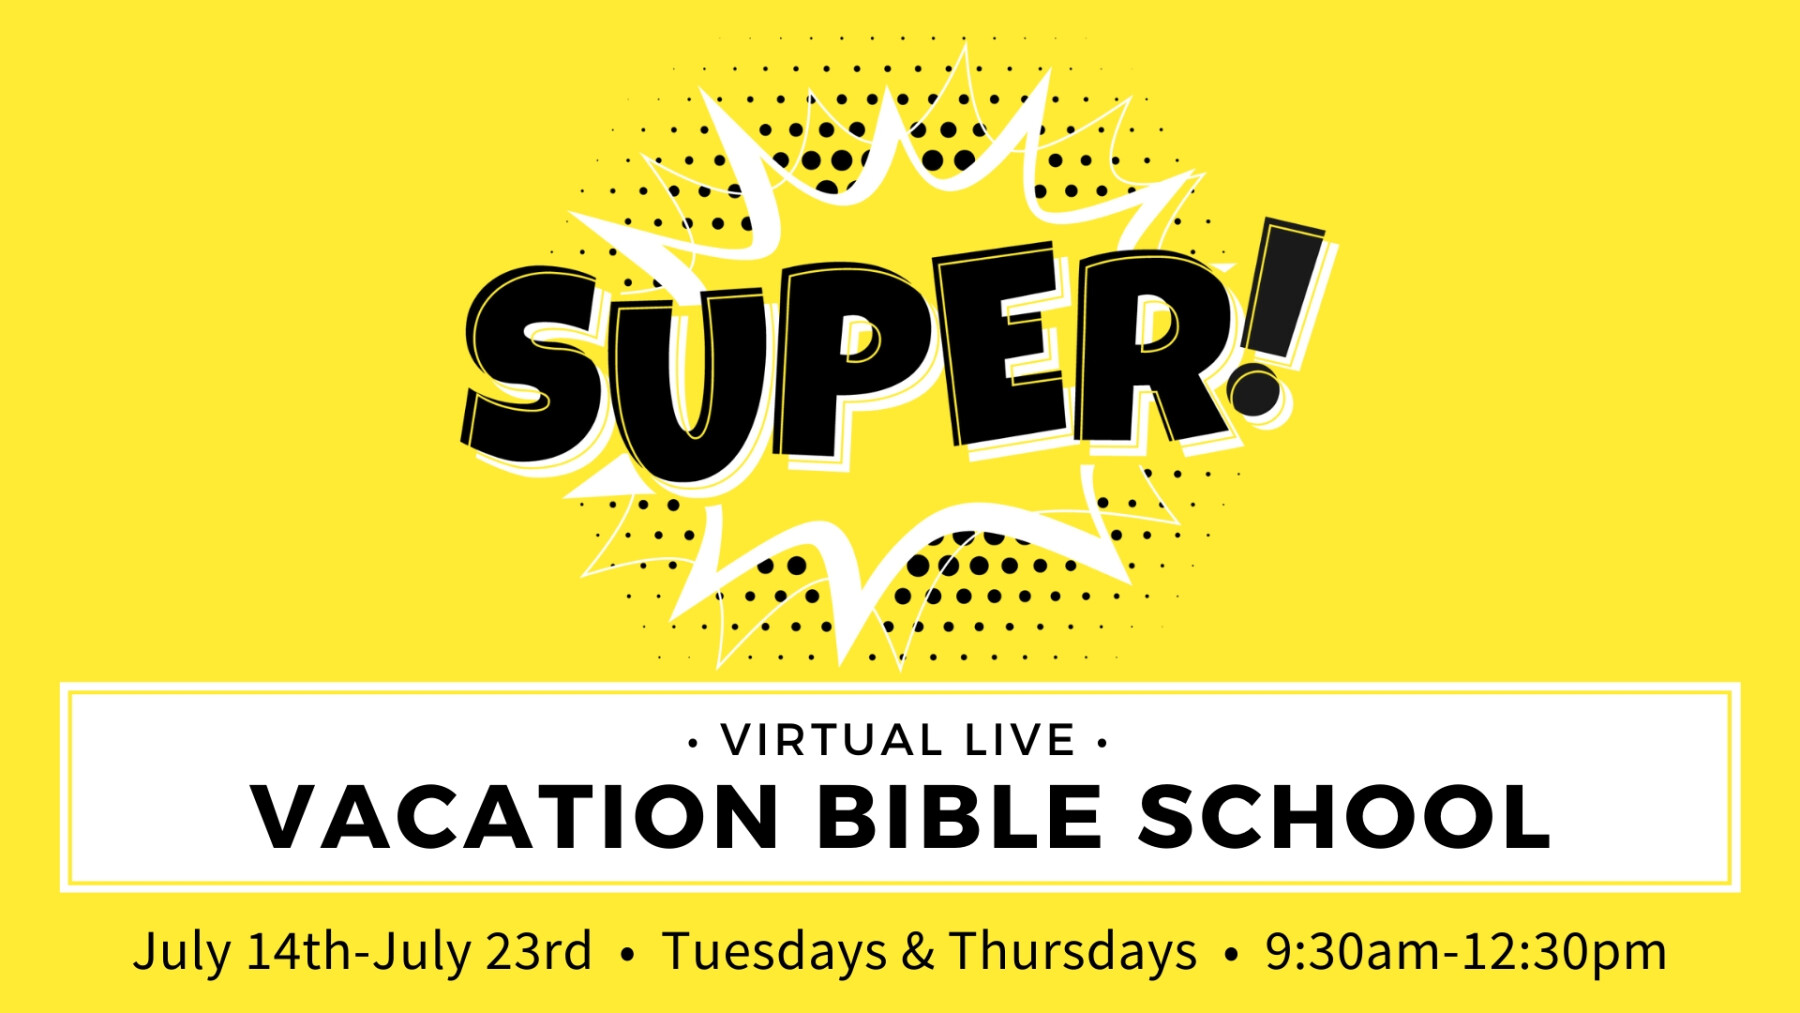 Vacation Bible School - SUPER!